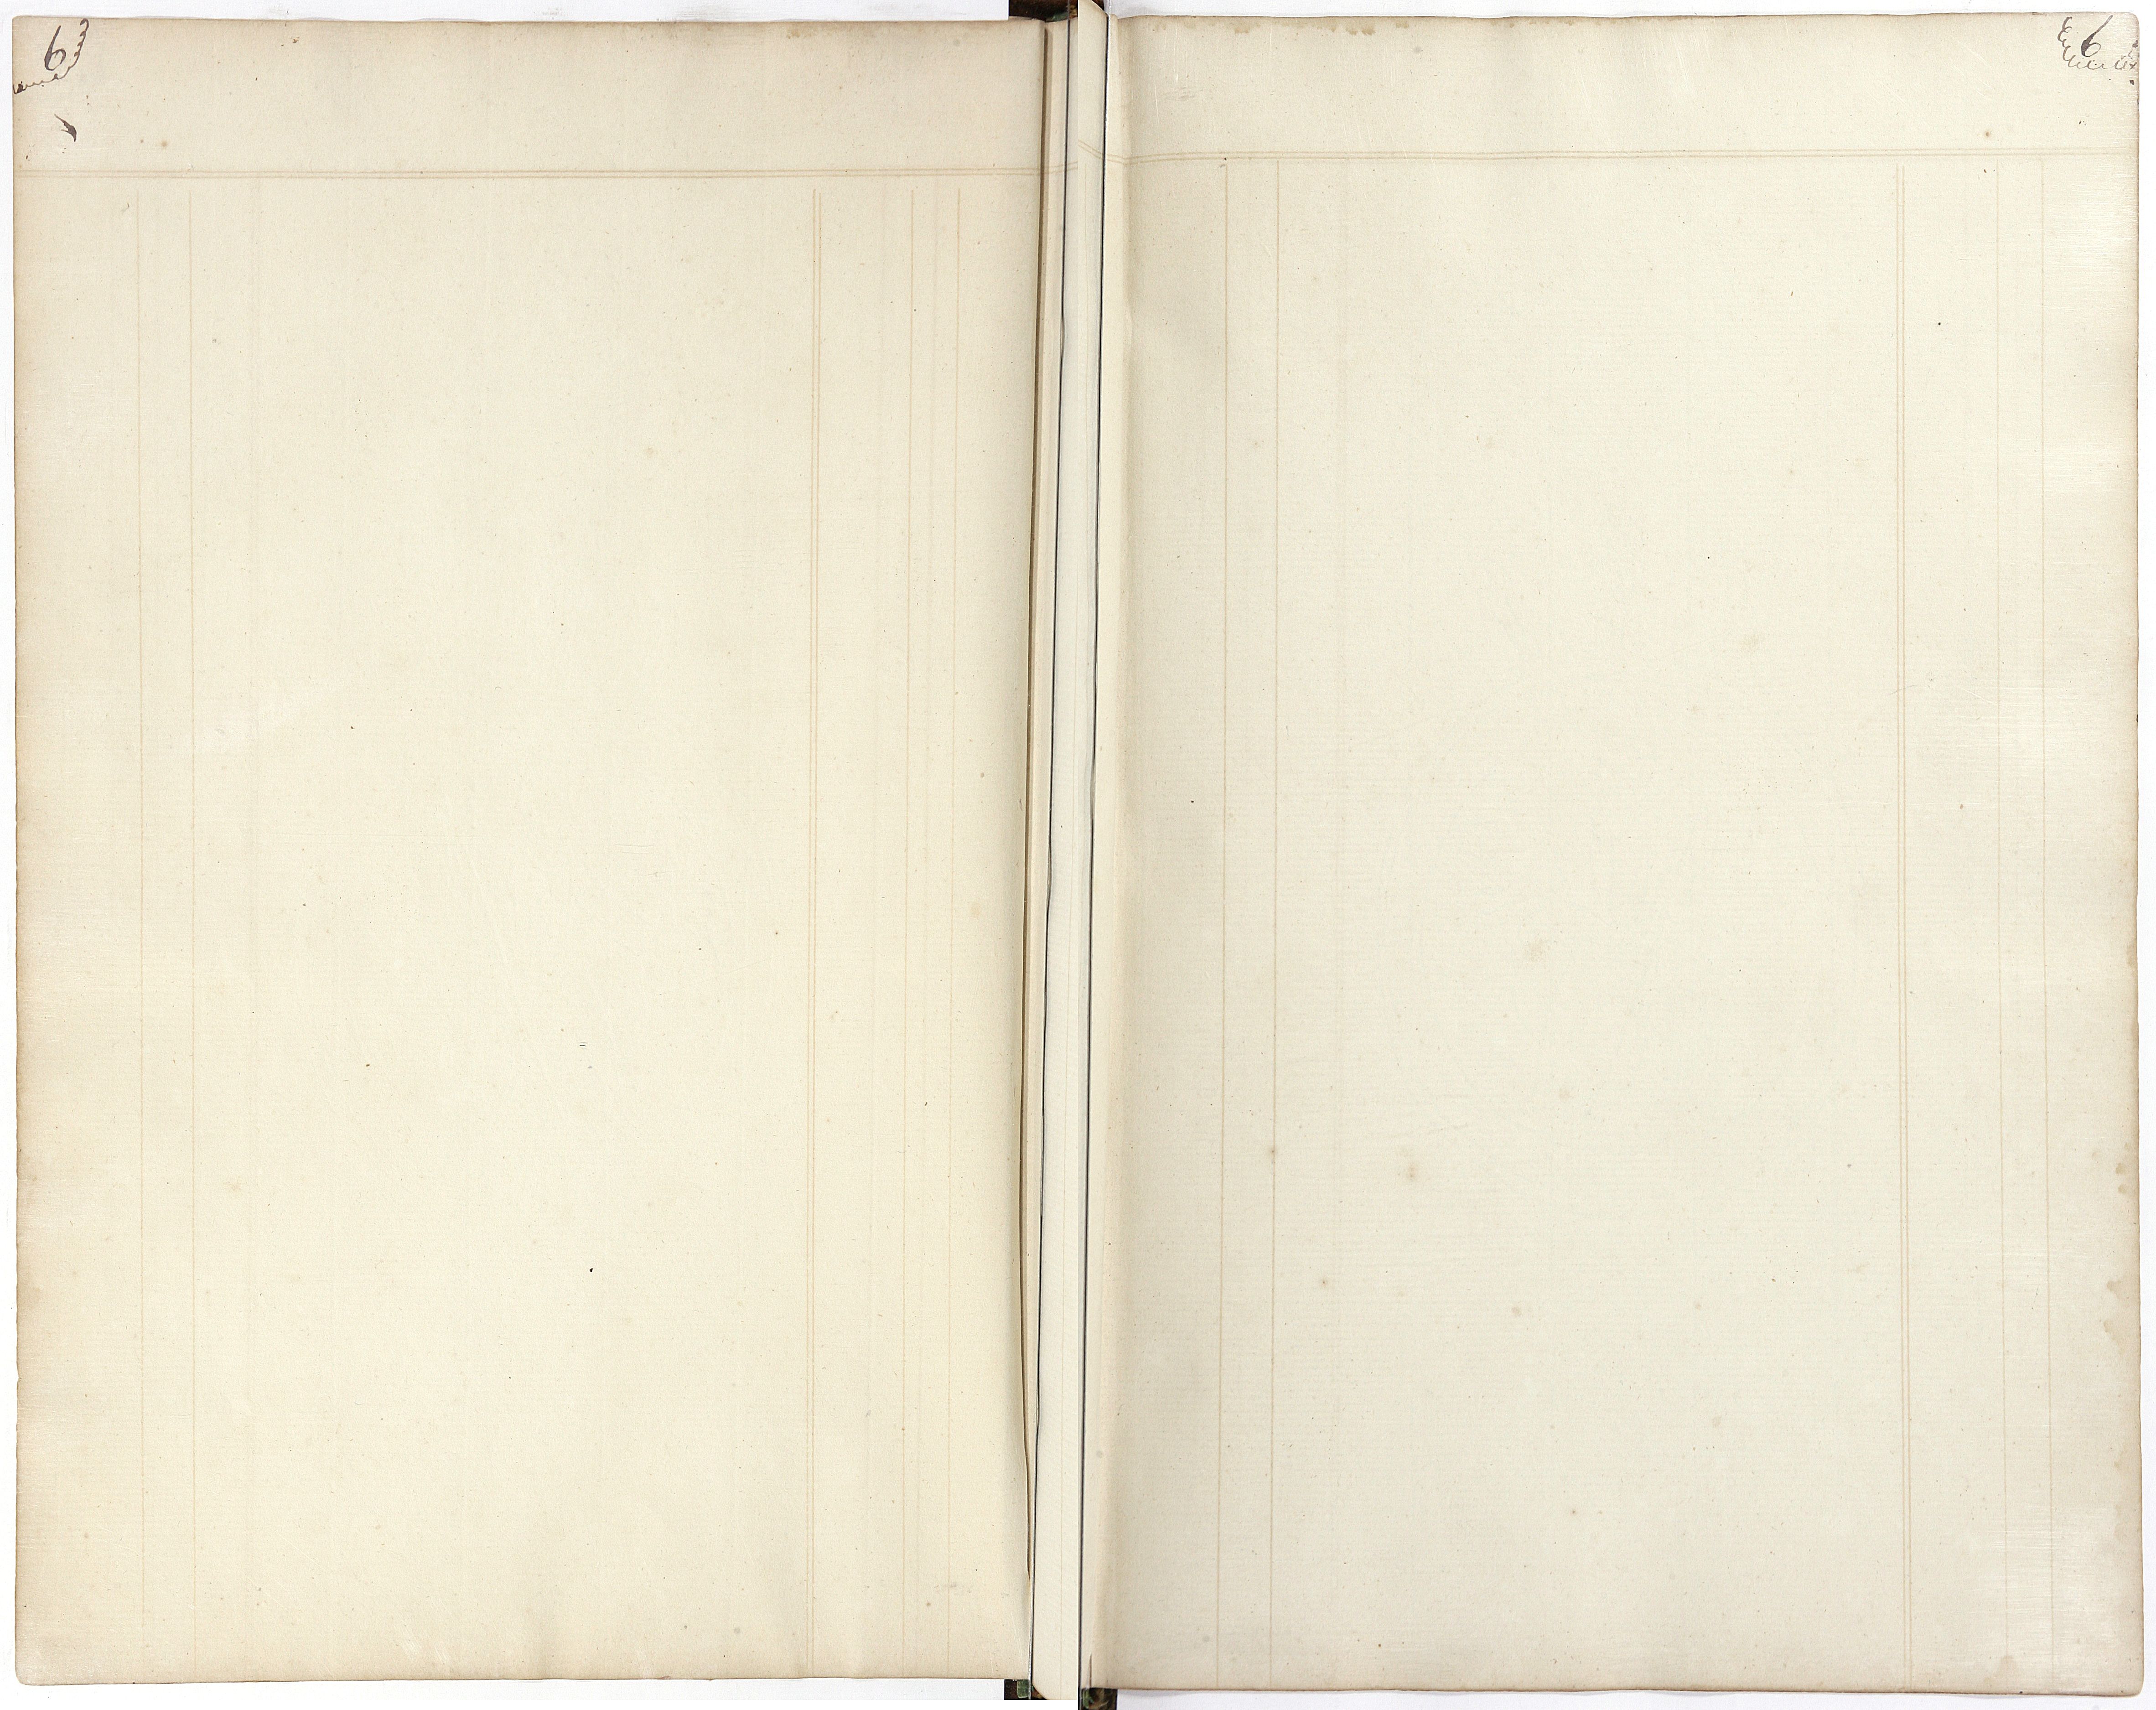 Image of Folio 6 (transcription below)